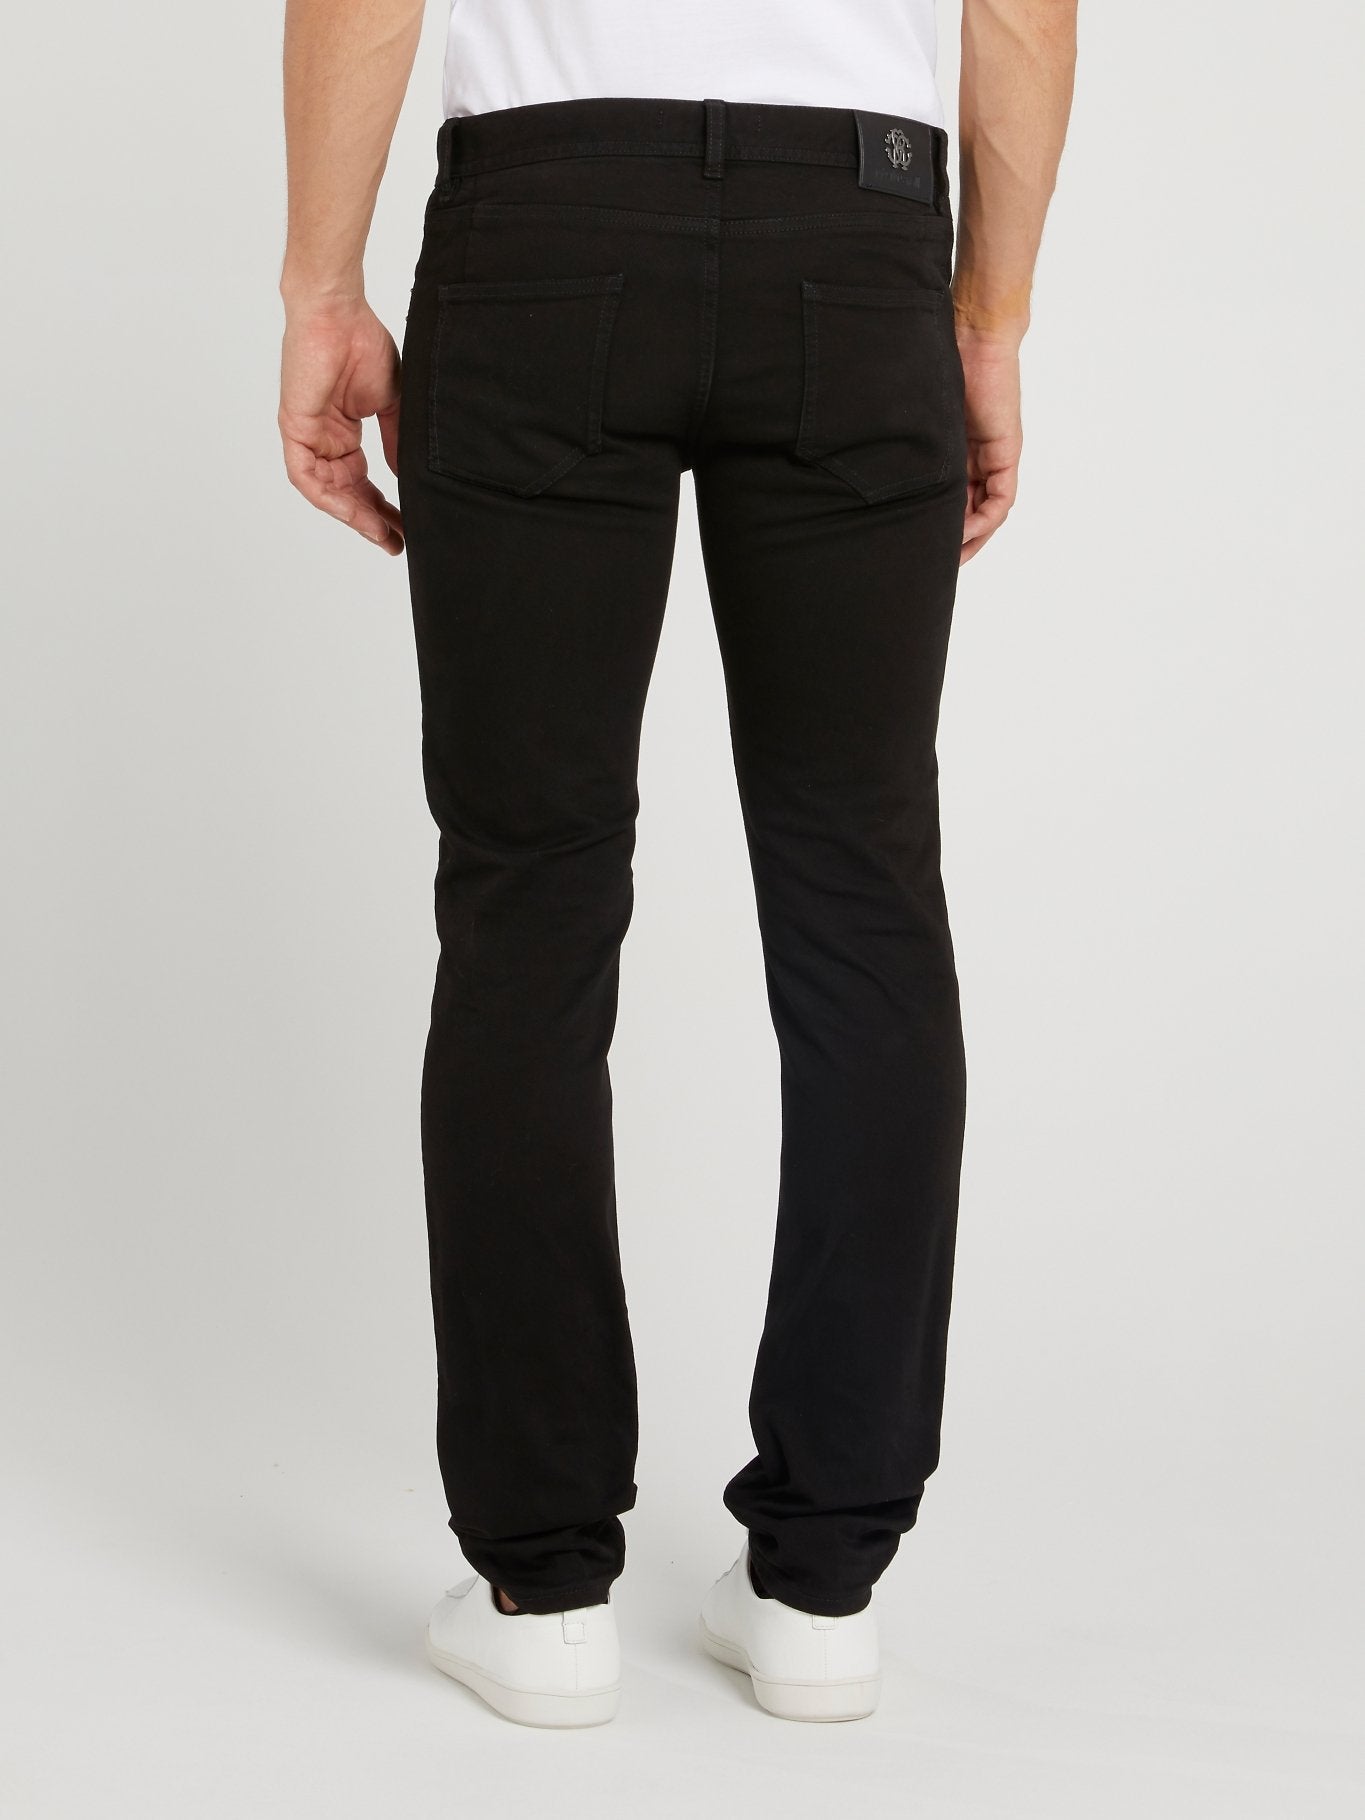 Black Stud Detail Skinny Jeans